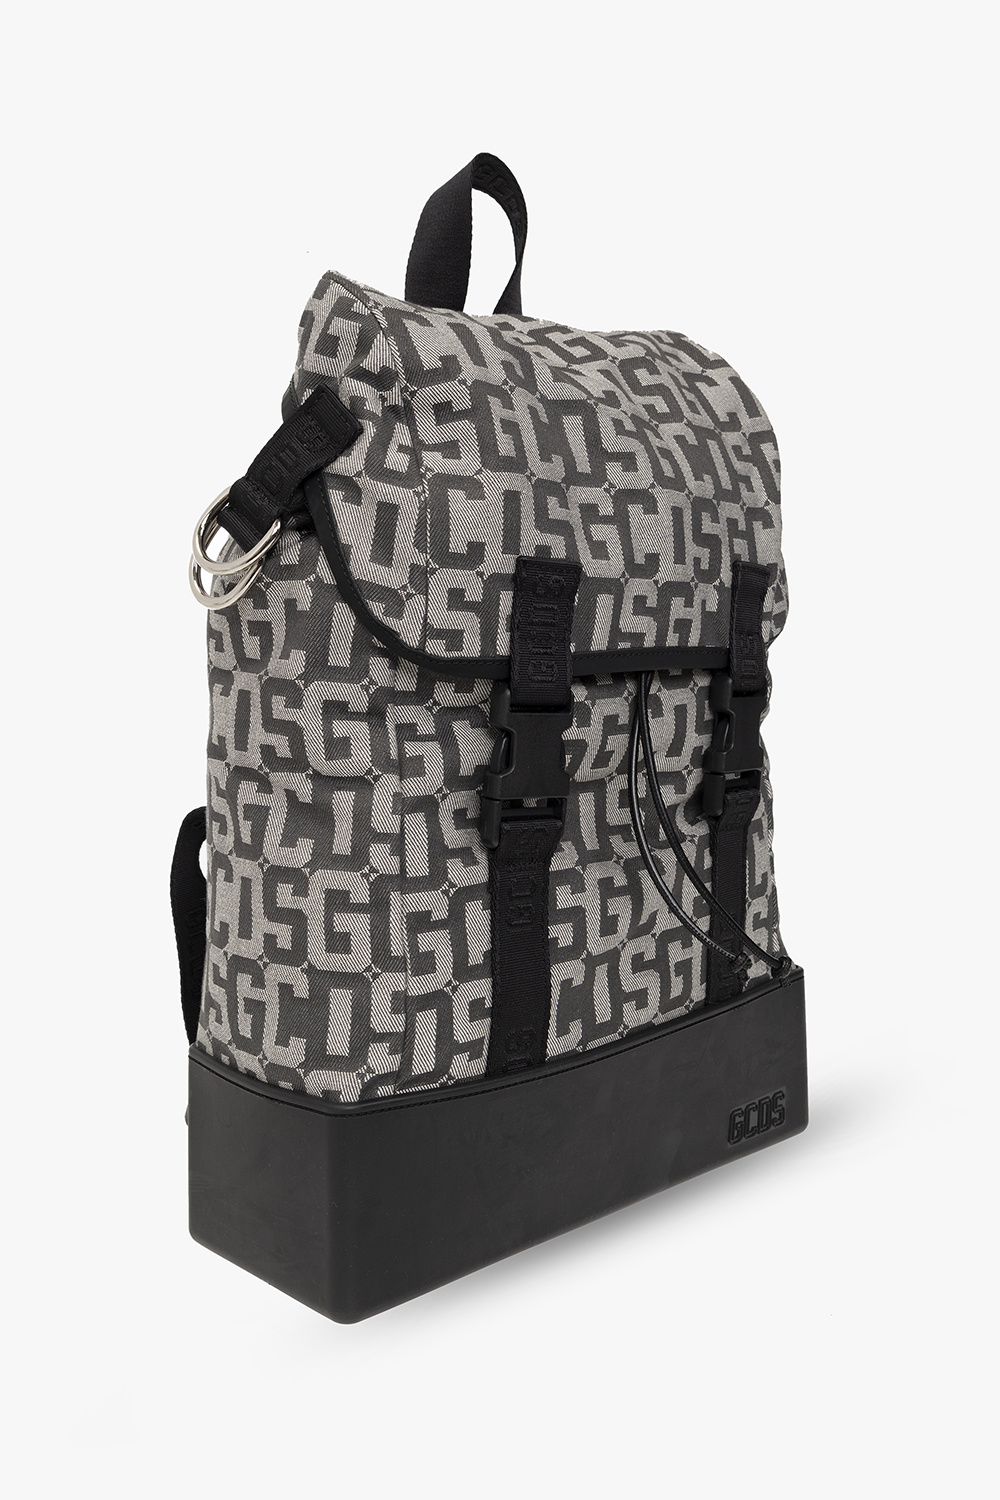 GCDS Monogrammed hobo backpack